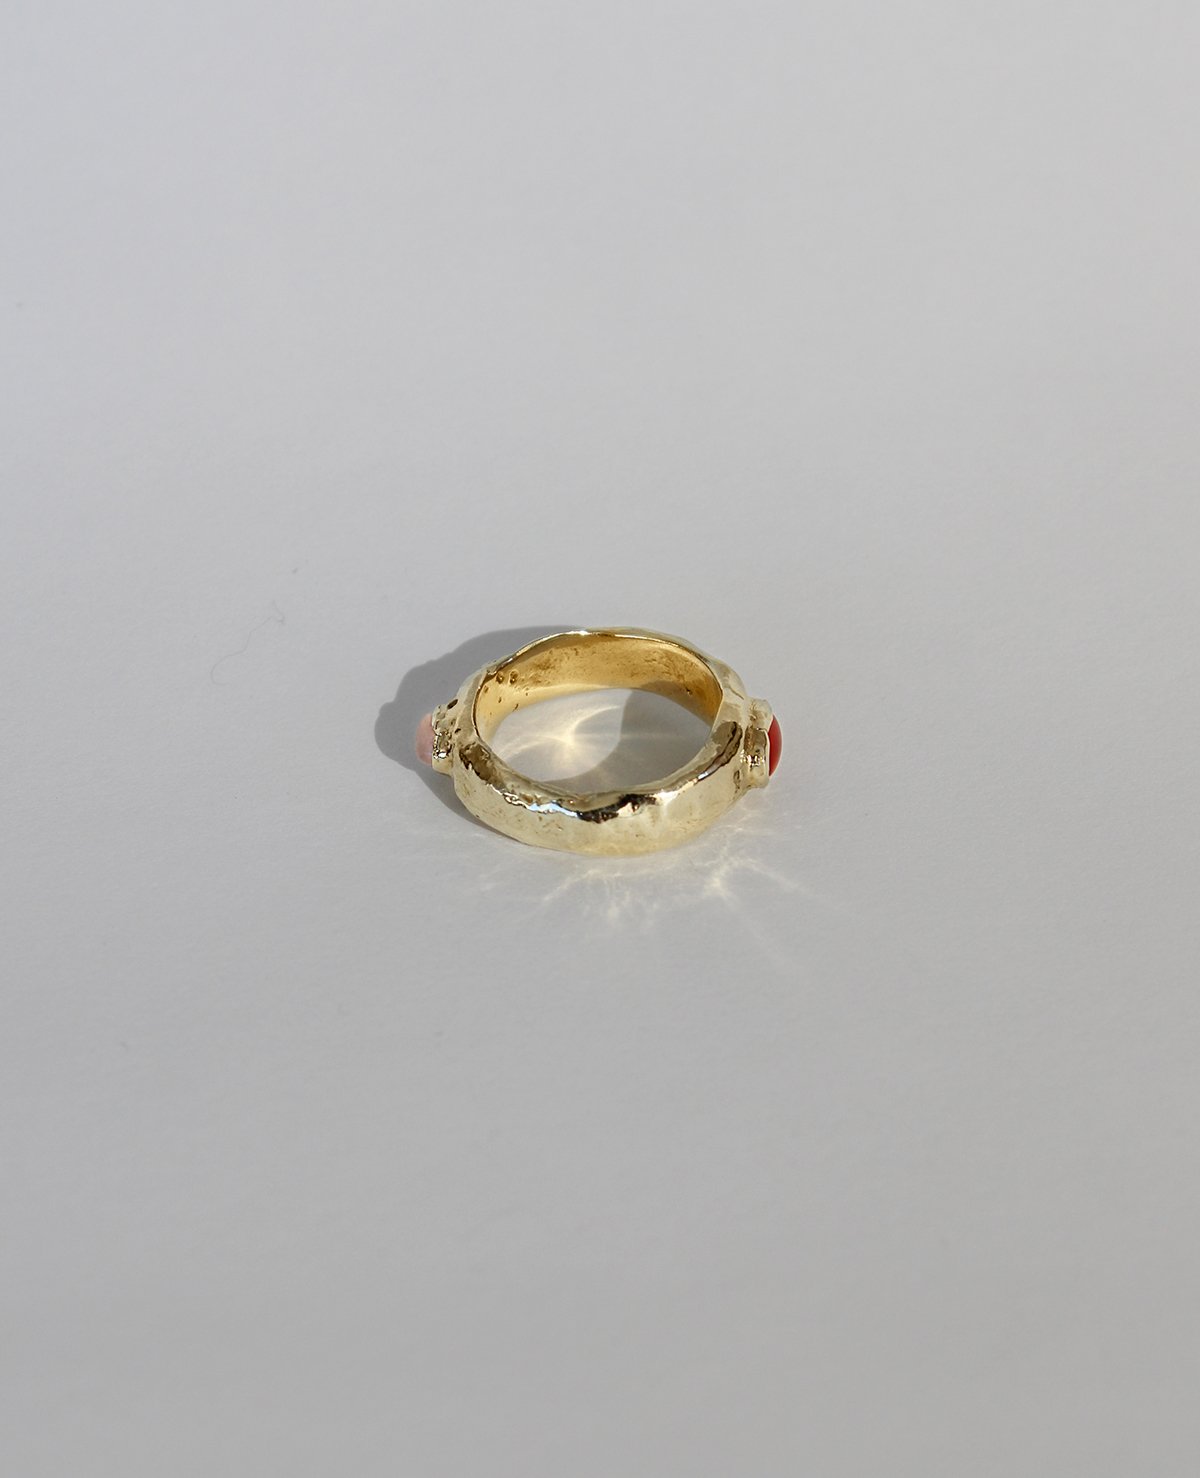 GEMINI // silver ring - ORA-C jewelry - handmade jewelry by Montreal based independent designer Caroline Pham